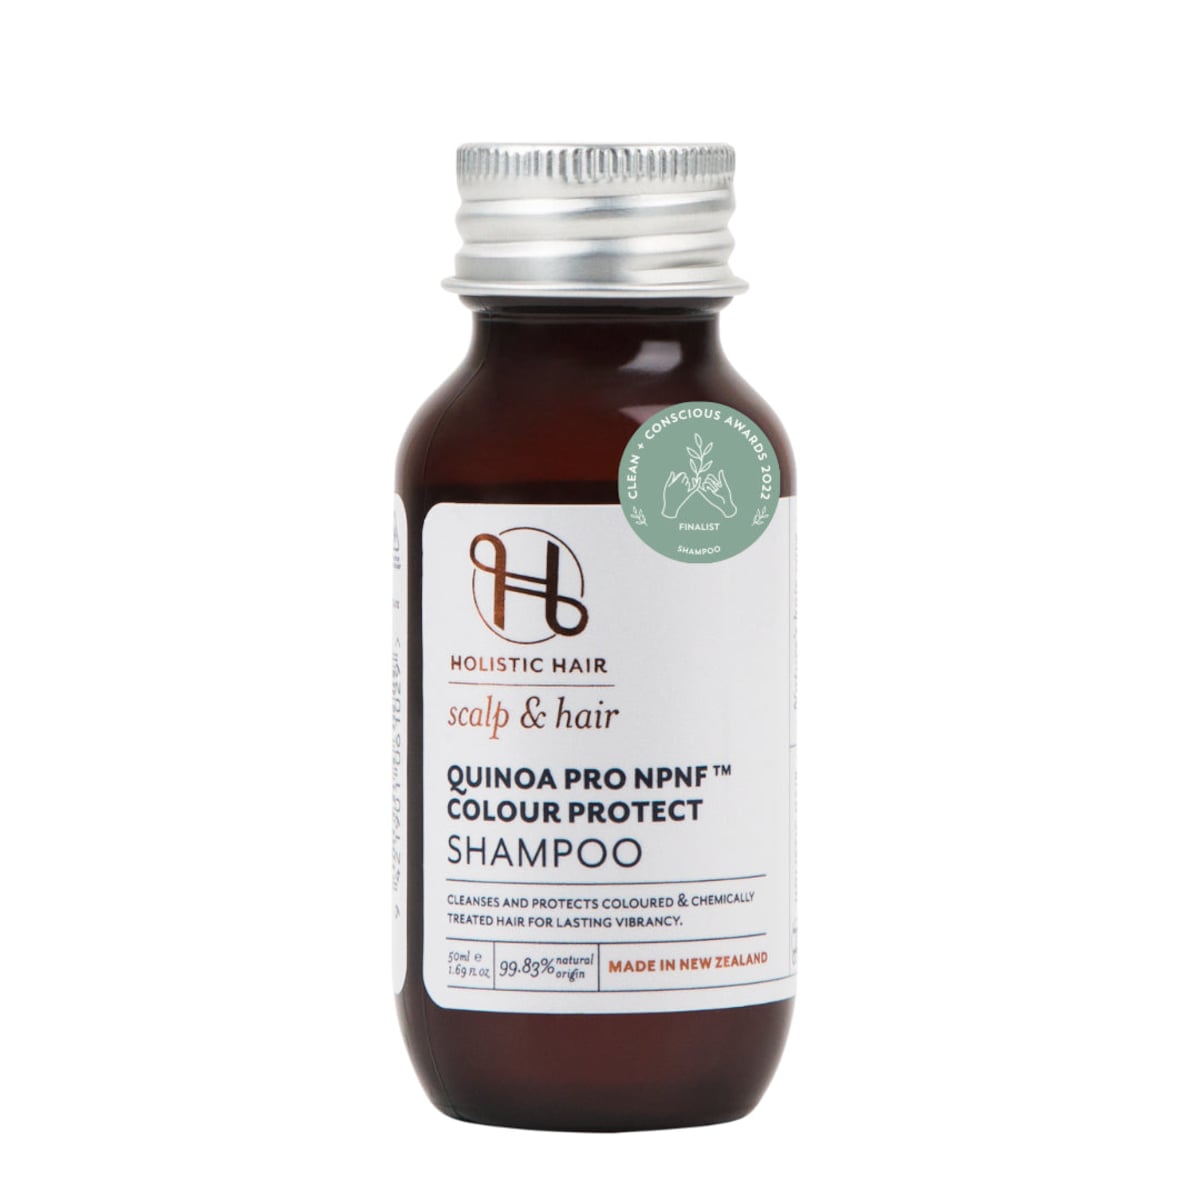 Holistic Hair Quinoa Pro NPNF Colour Protect Shampoo & Conditioner Travel Set - 2 x 50ml